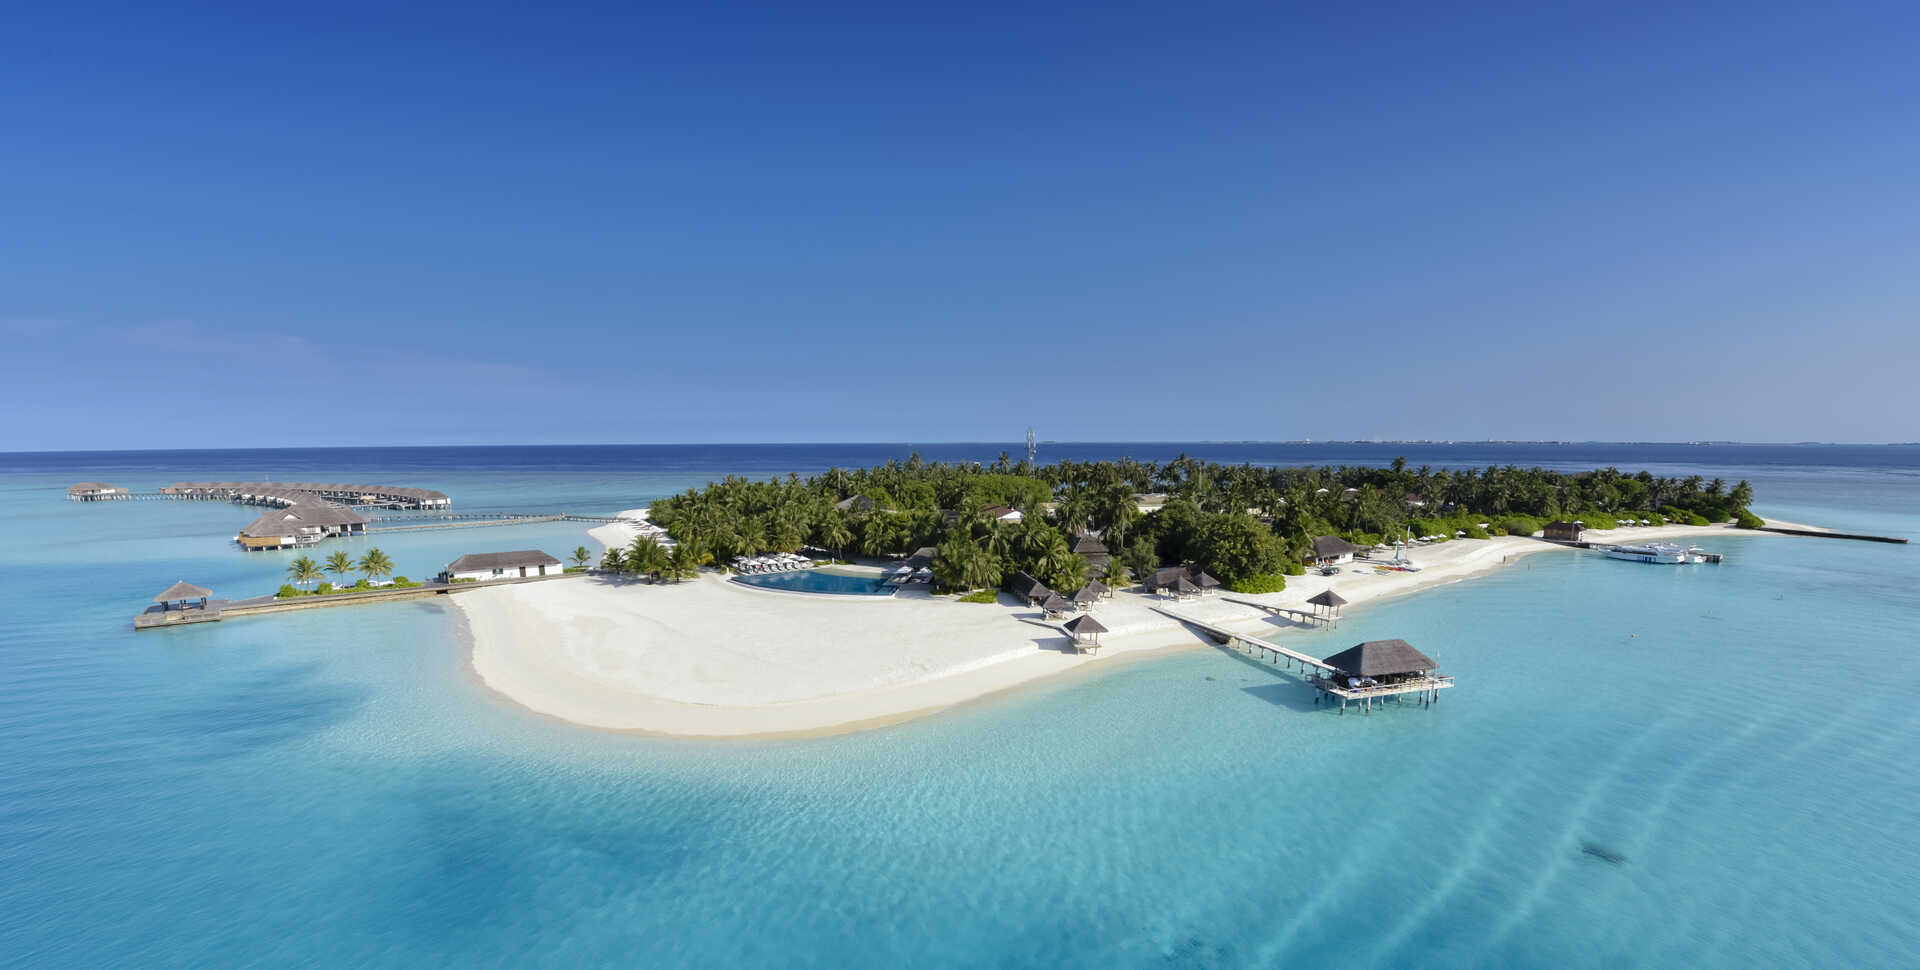 Aerial view of Velassaru resort in the Maldives